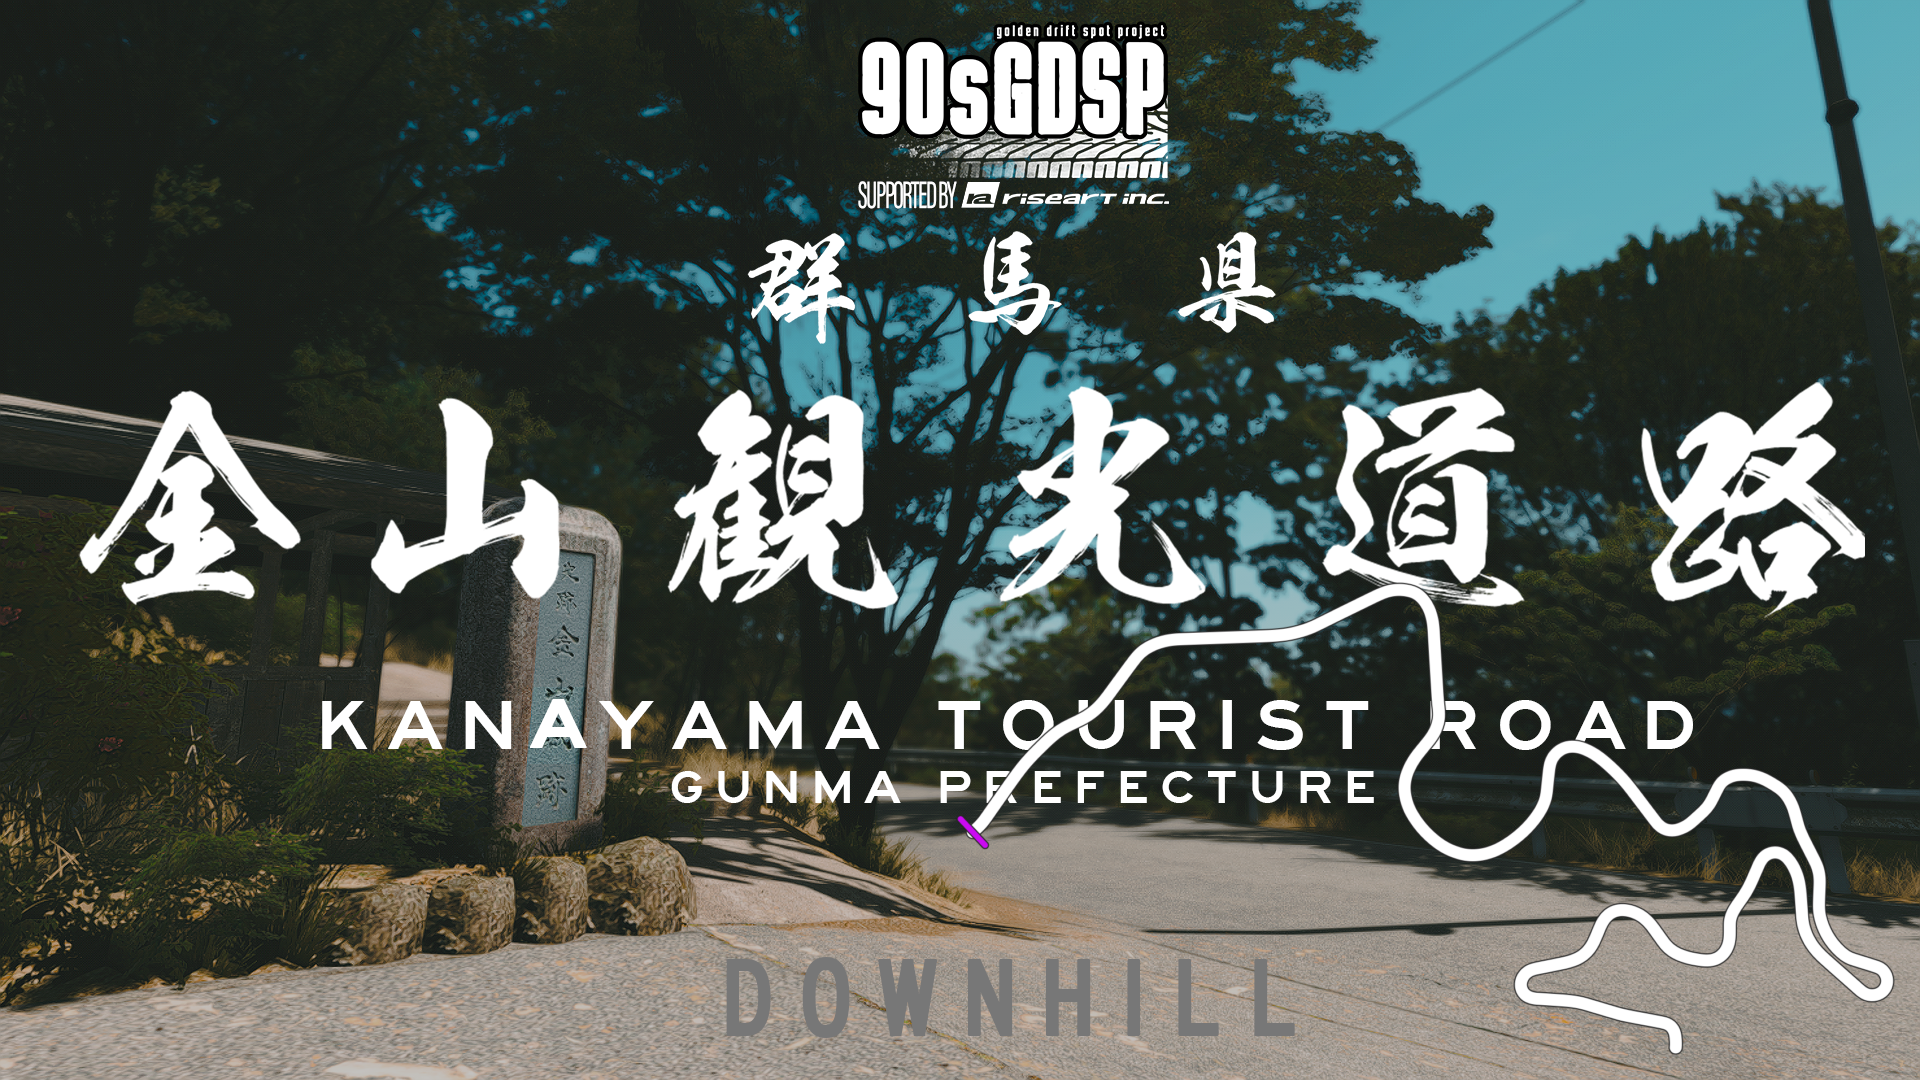 90sgdsp_kaneyama downhill